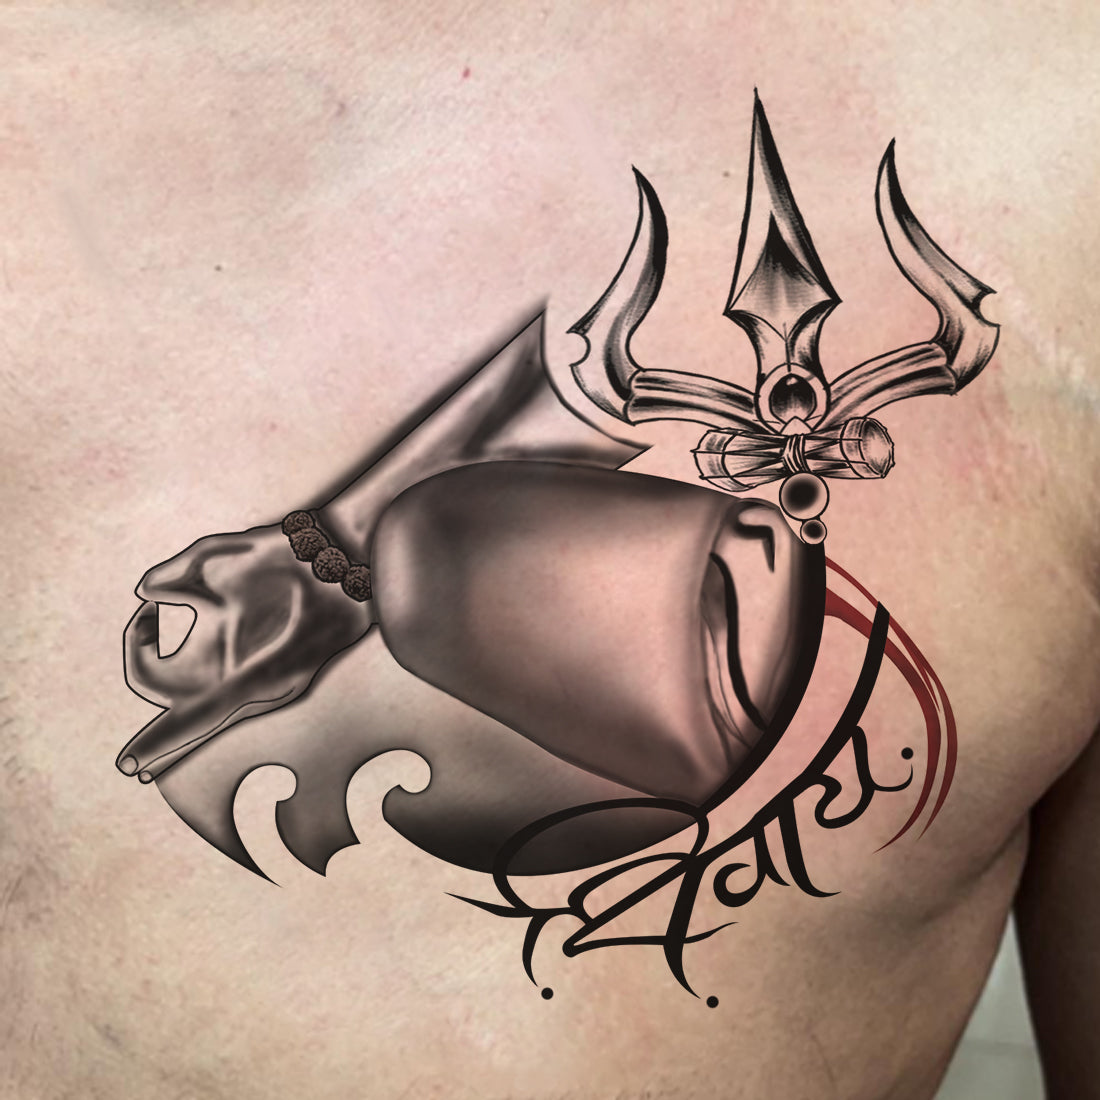 Ravan With Crown Tattoo | Name tattoo, Crown tattoo, Tattoos